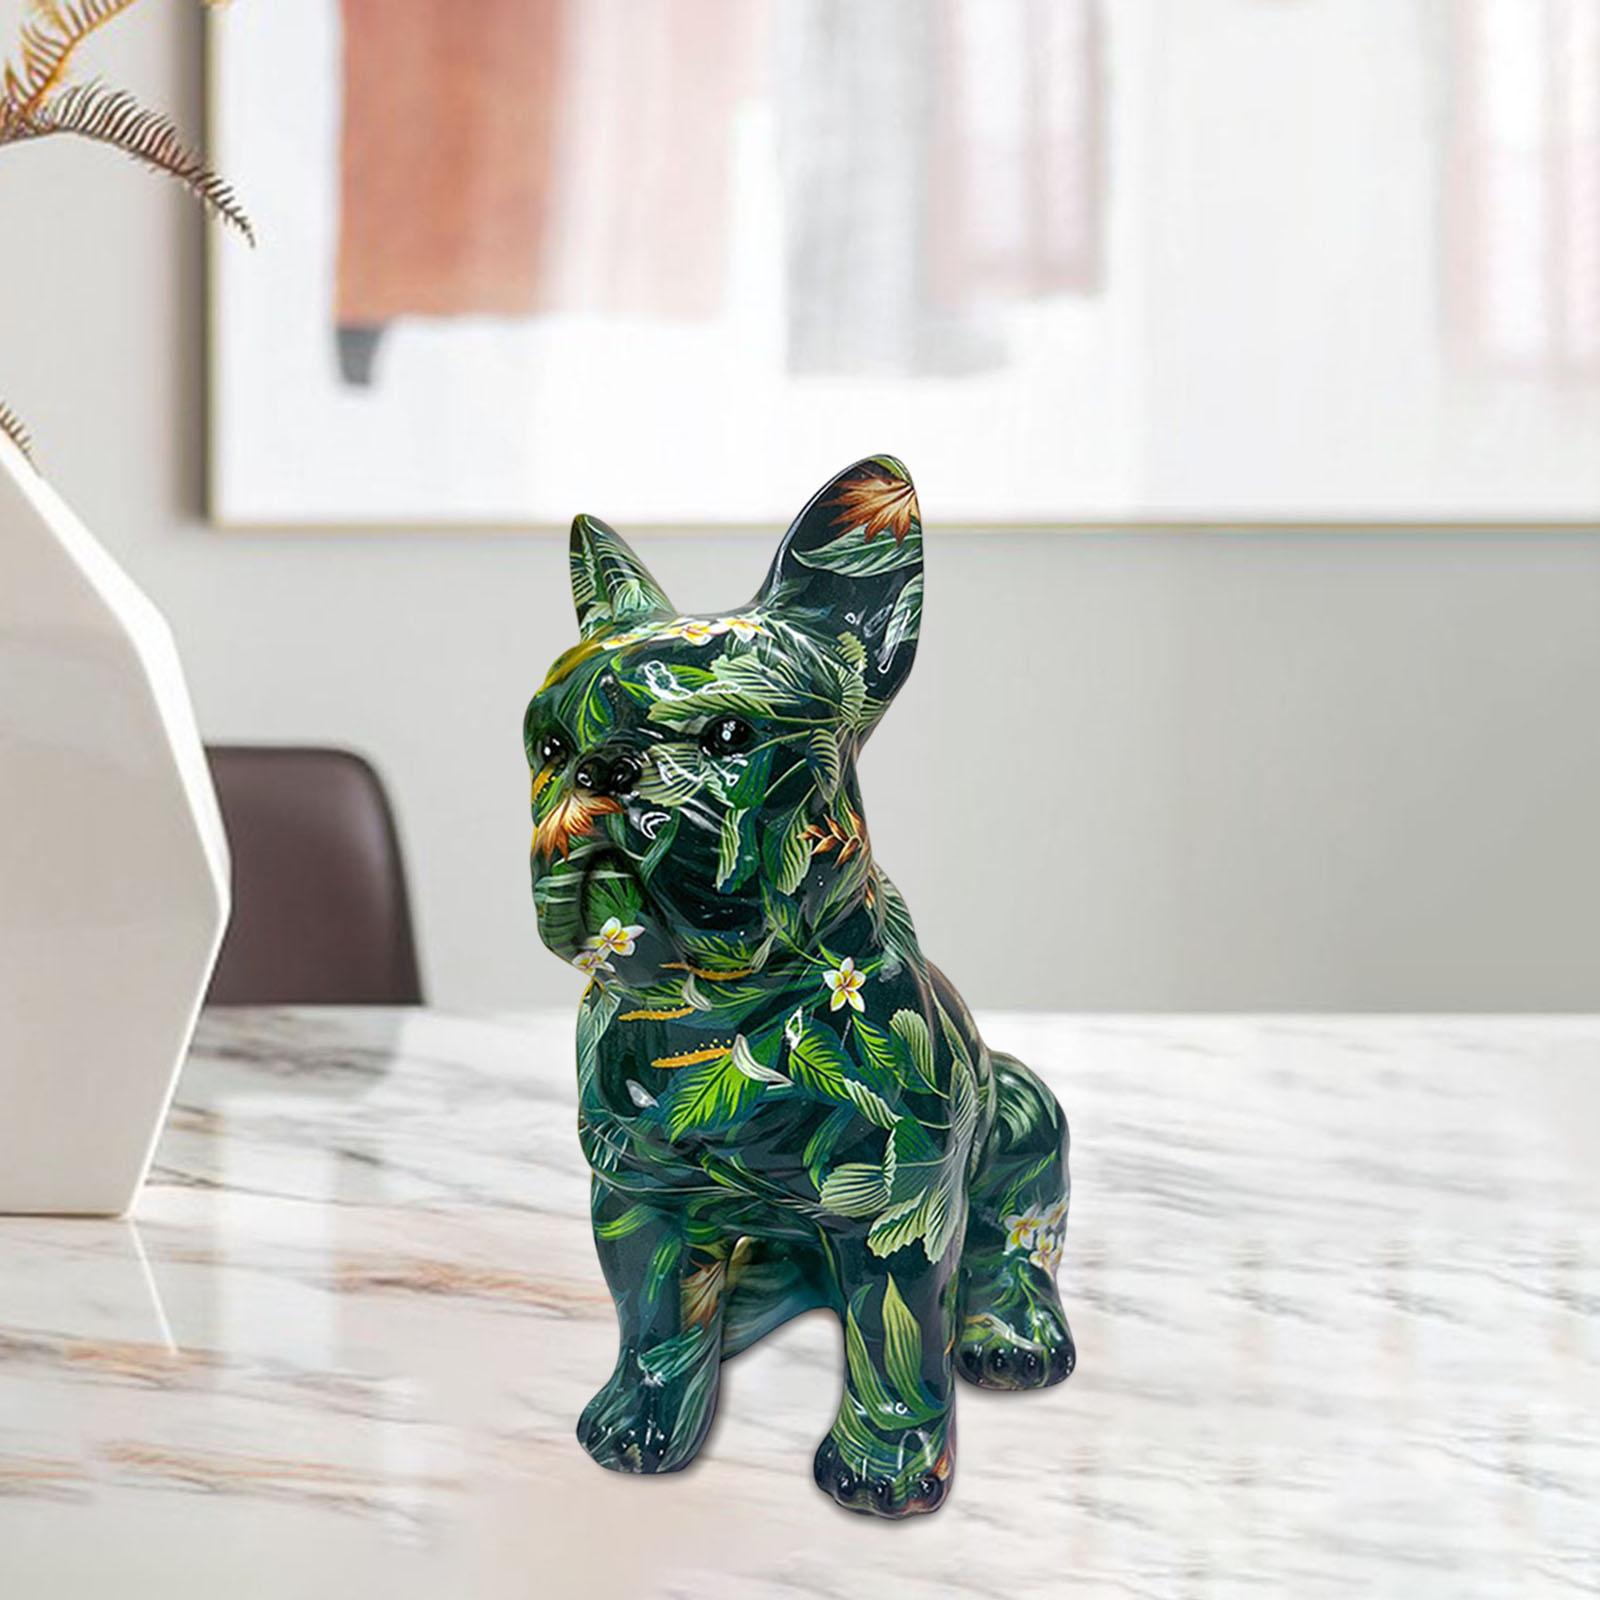 Animals Dog Figure Model Ornaments Sculpture for Home Desktop Decor Green